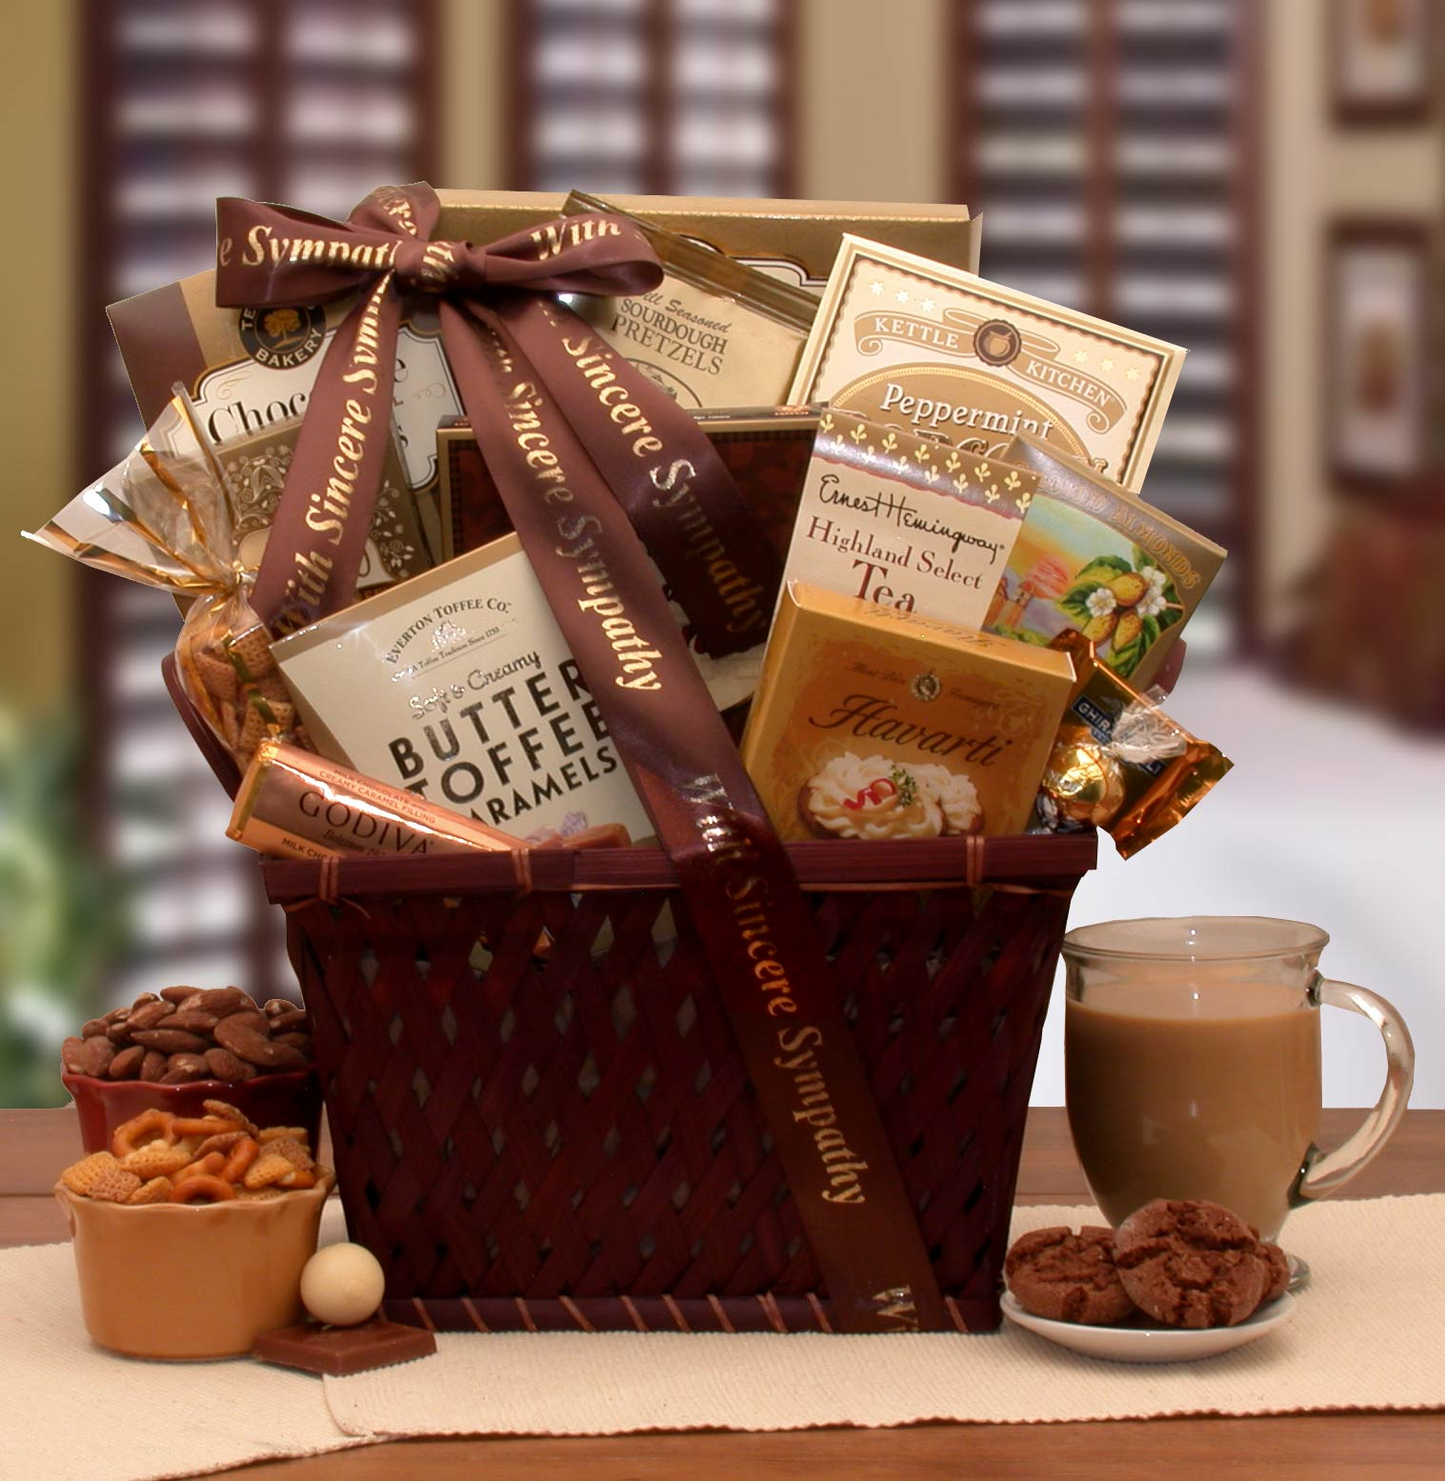 Sending Our Prayers Sympathy Gift Basket - Comforting Gourmet Treats